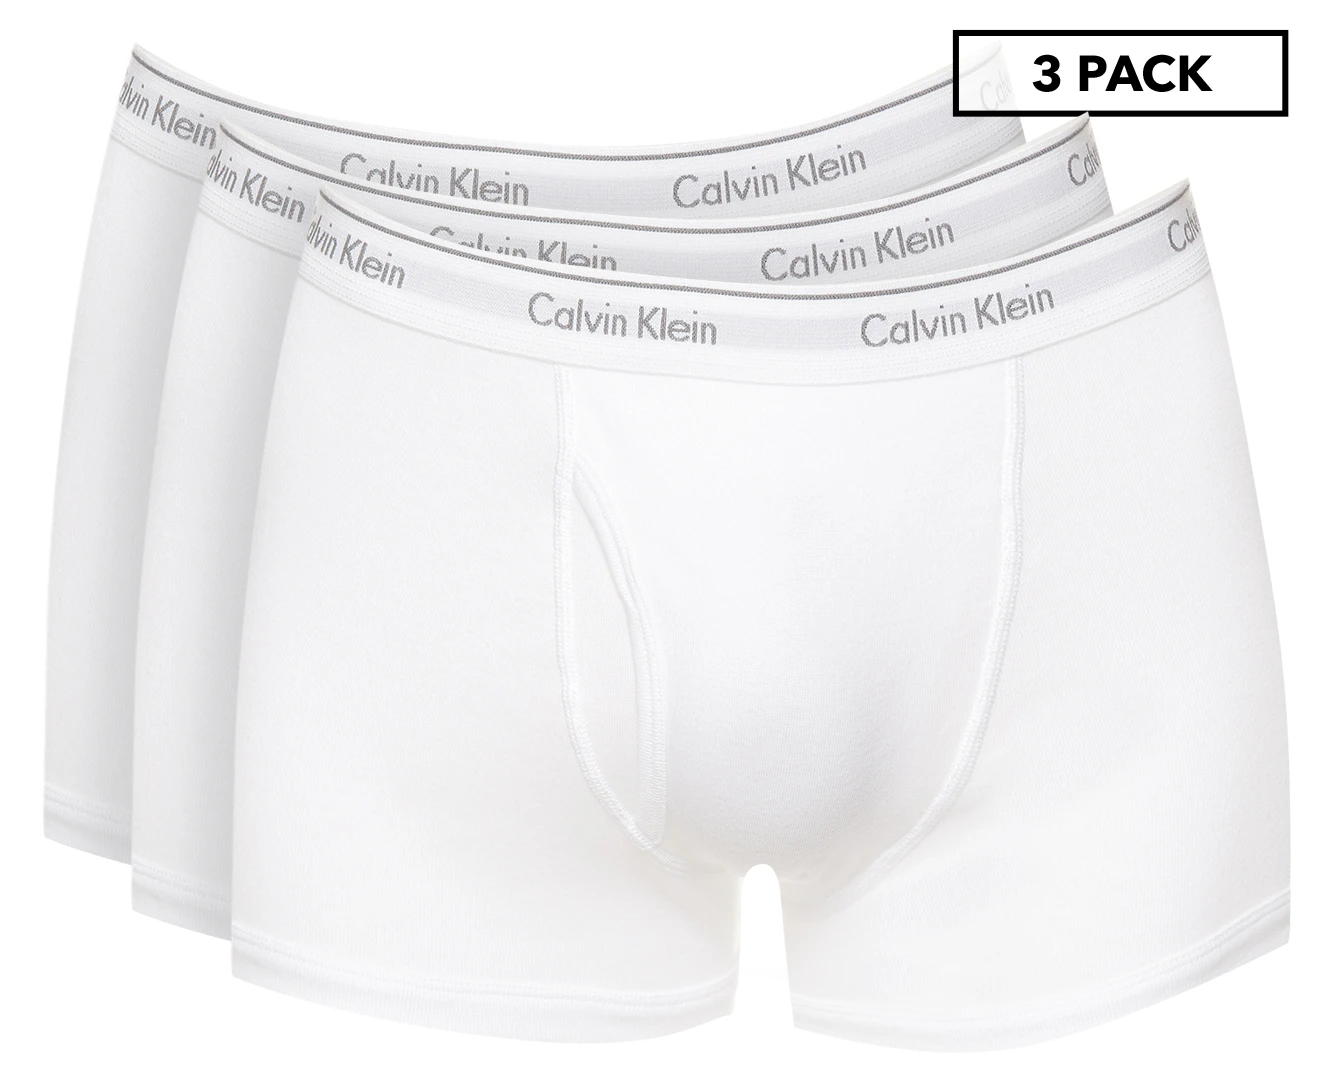 Calvin Klein Women's Motive Cotton Boyshorts 3-Pack - Black/White/Grey